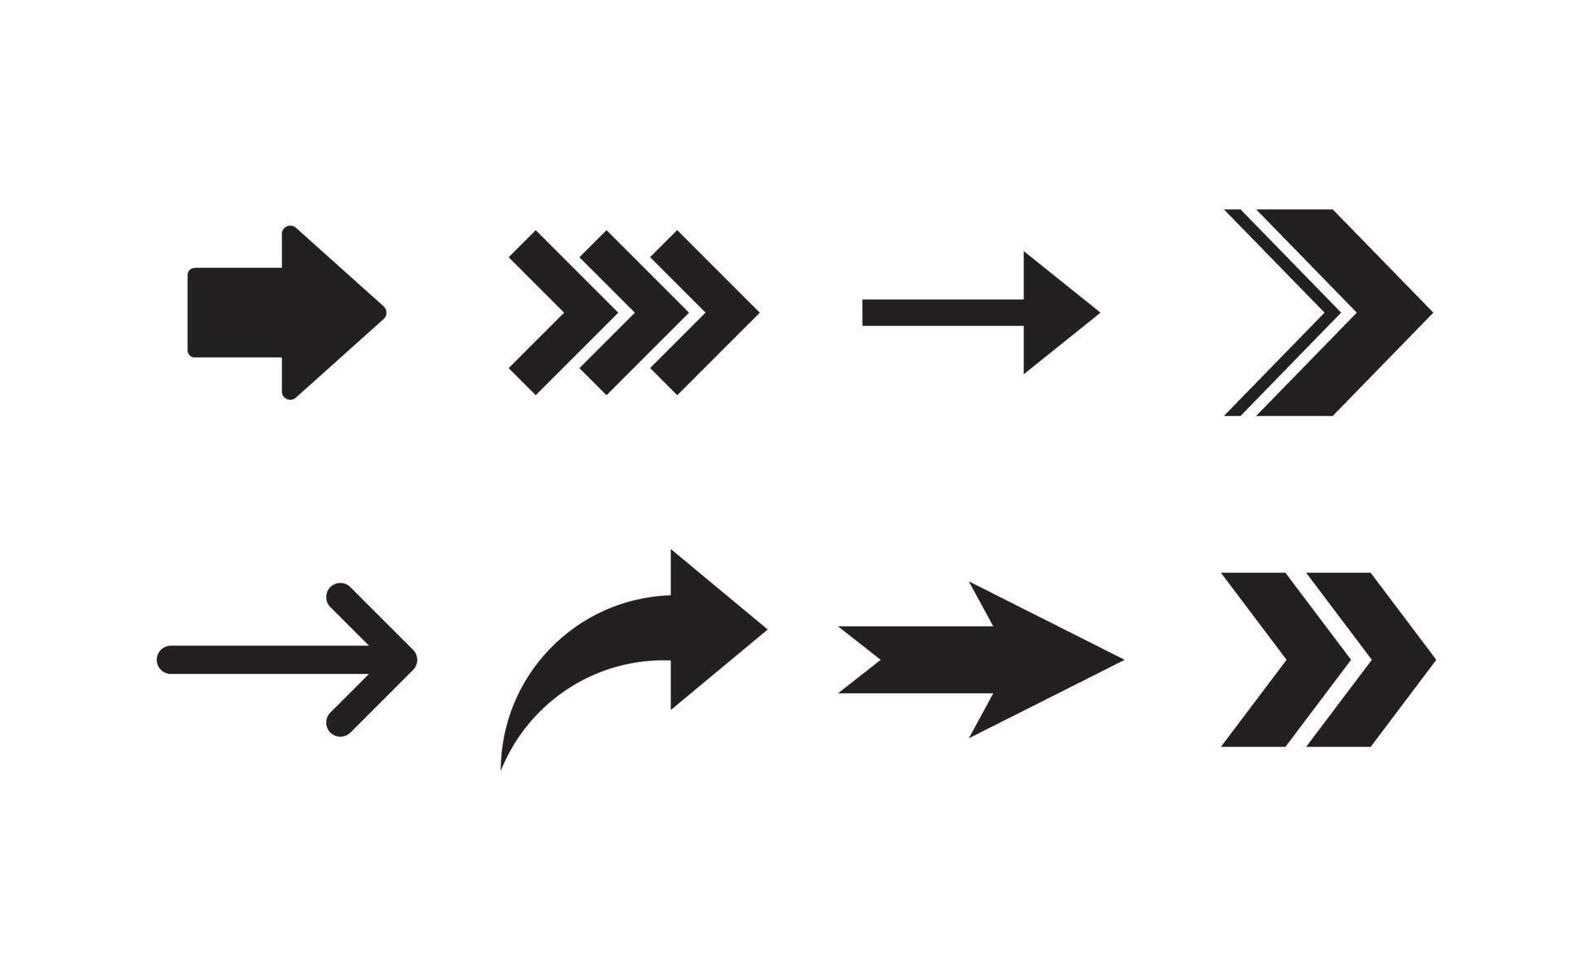 Arrows set. Arrow pictogram icon collection. vector